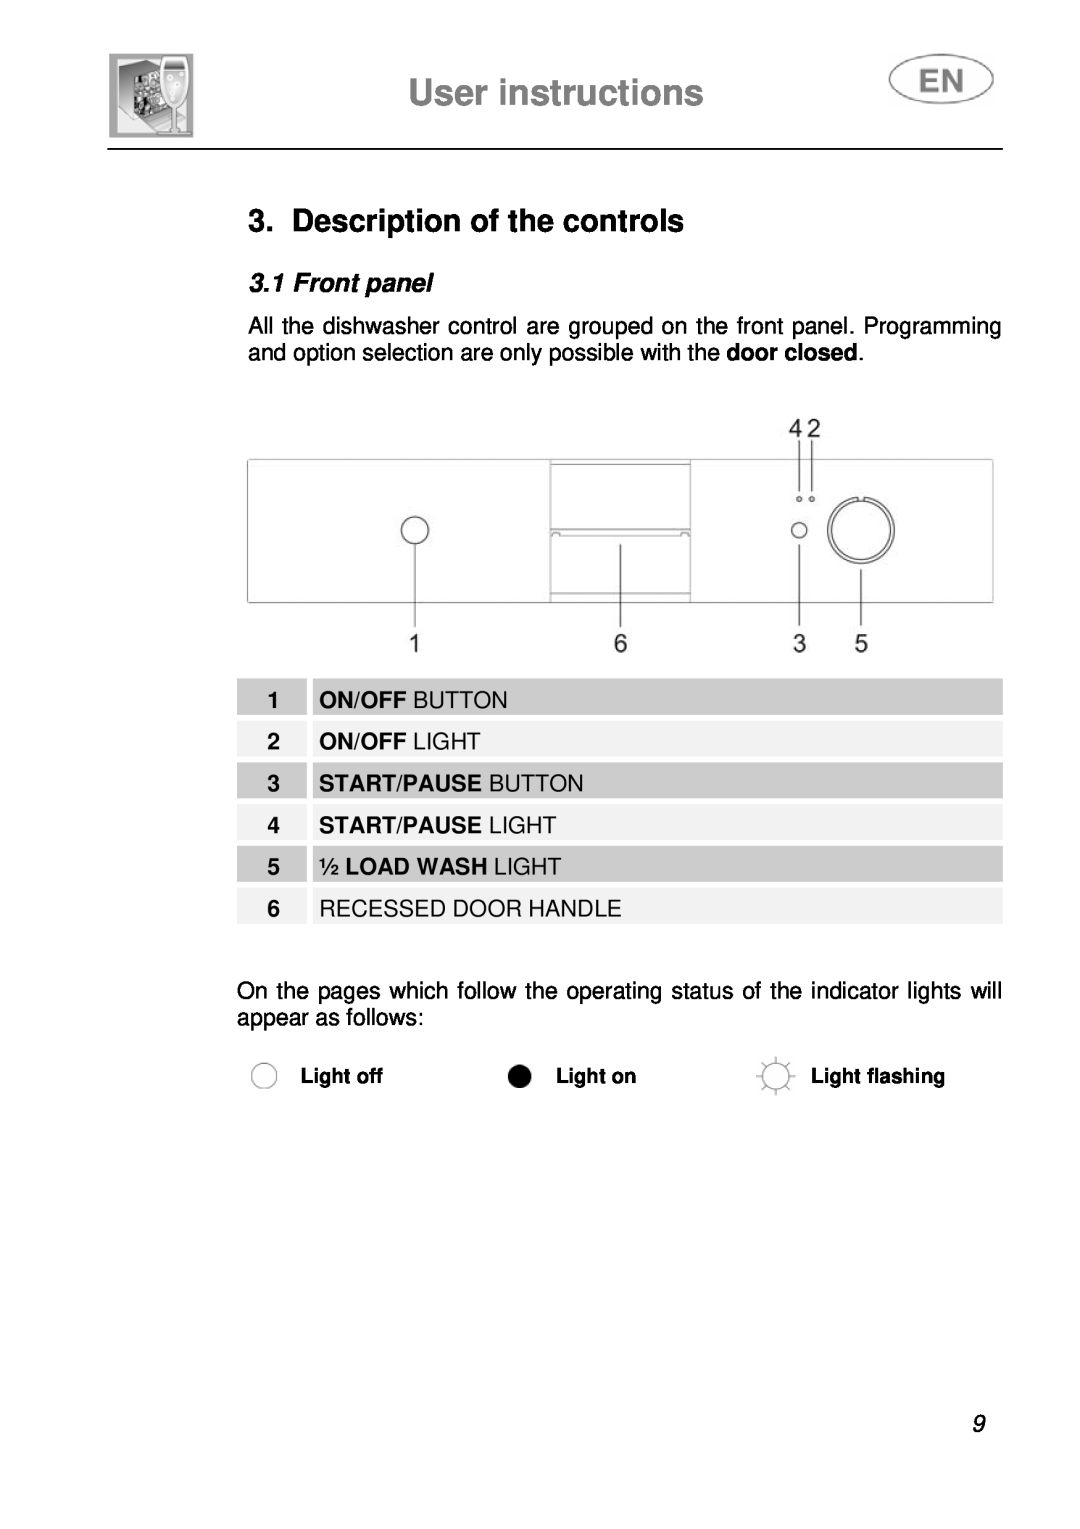 Smeg KLS55B instruction manual User instructions, Description of the controls, Front panel, 1 2 3, Start/Pause Light 